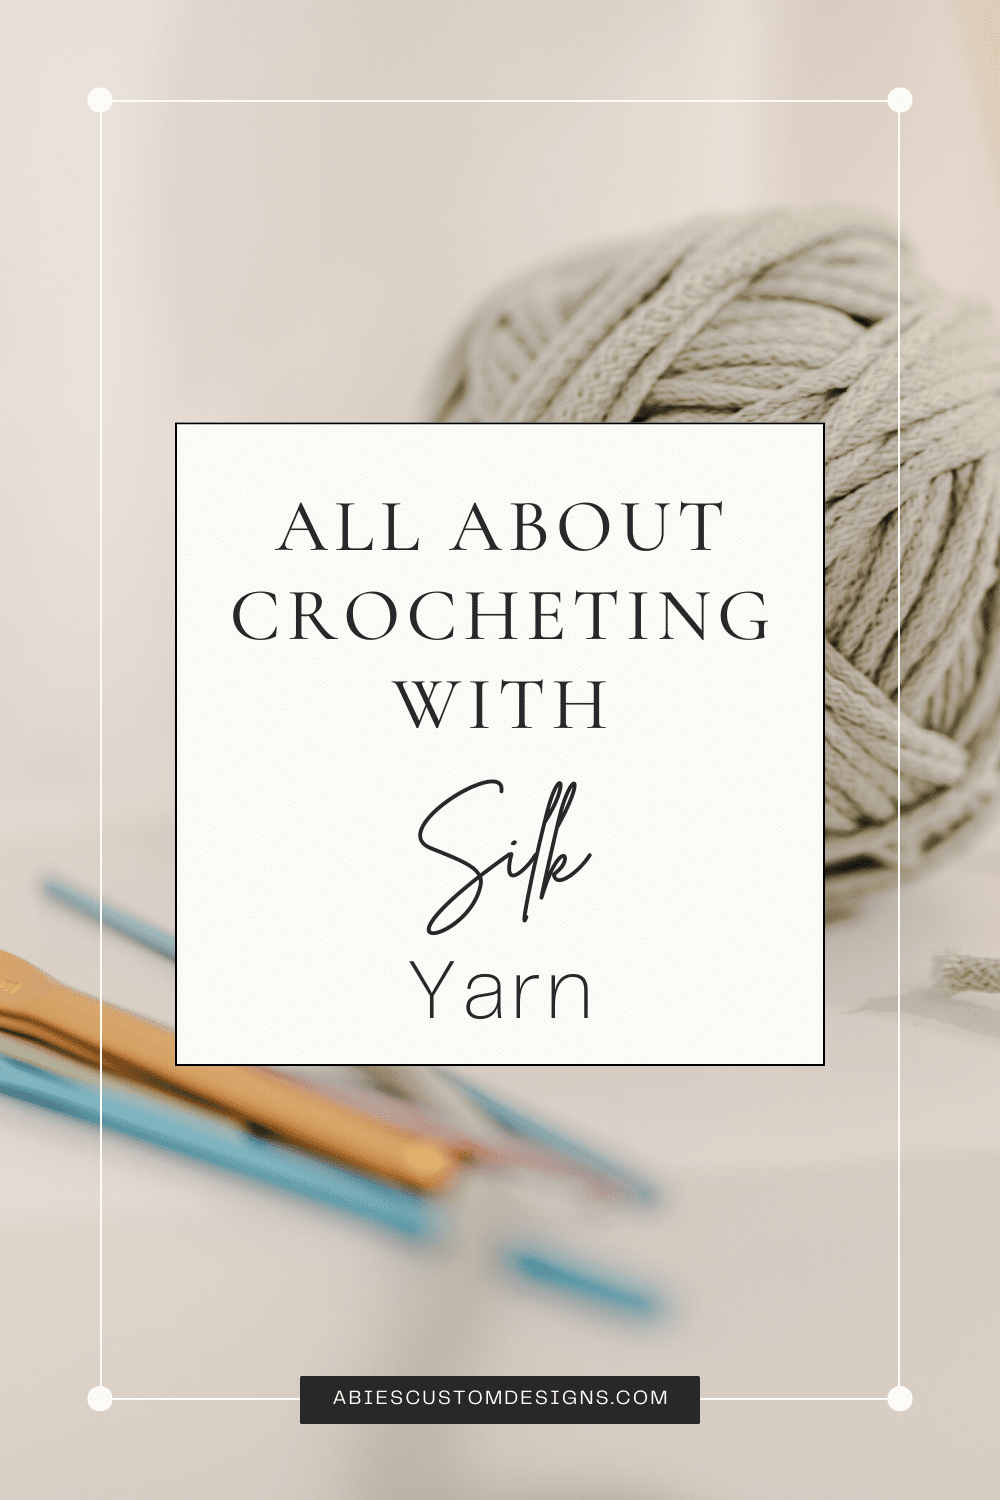 All About Crocheting will Silk Yarn